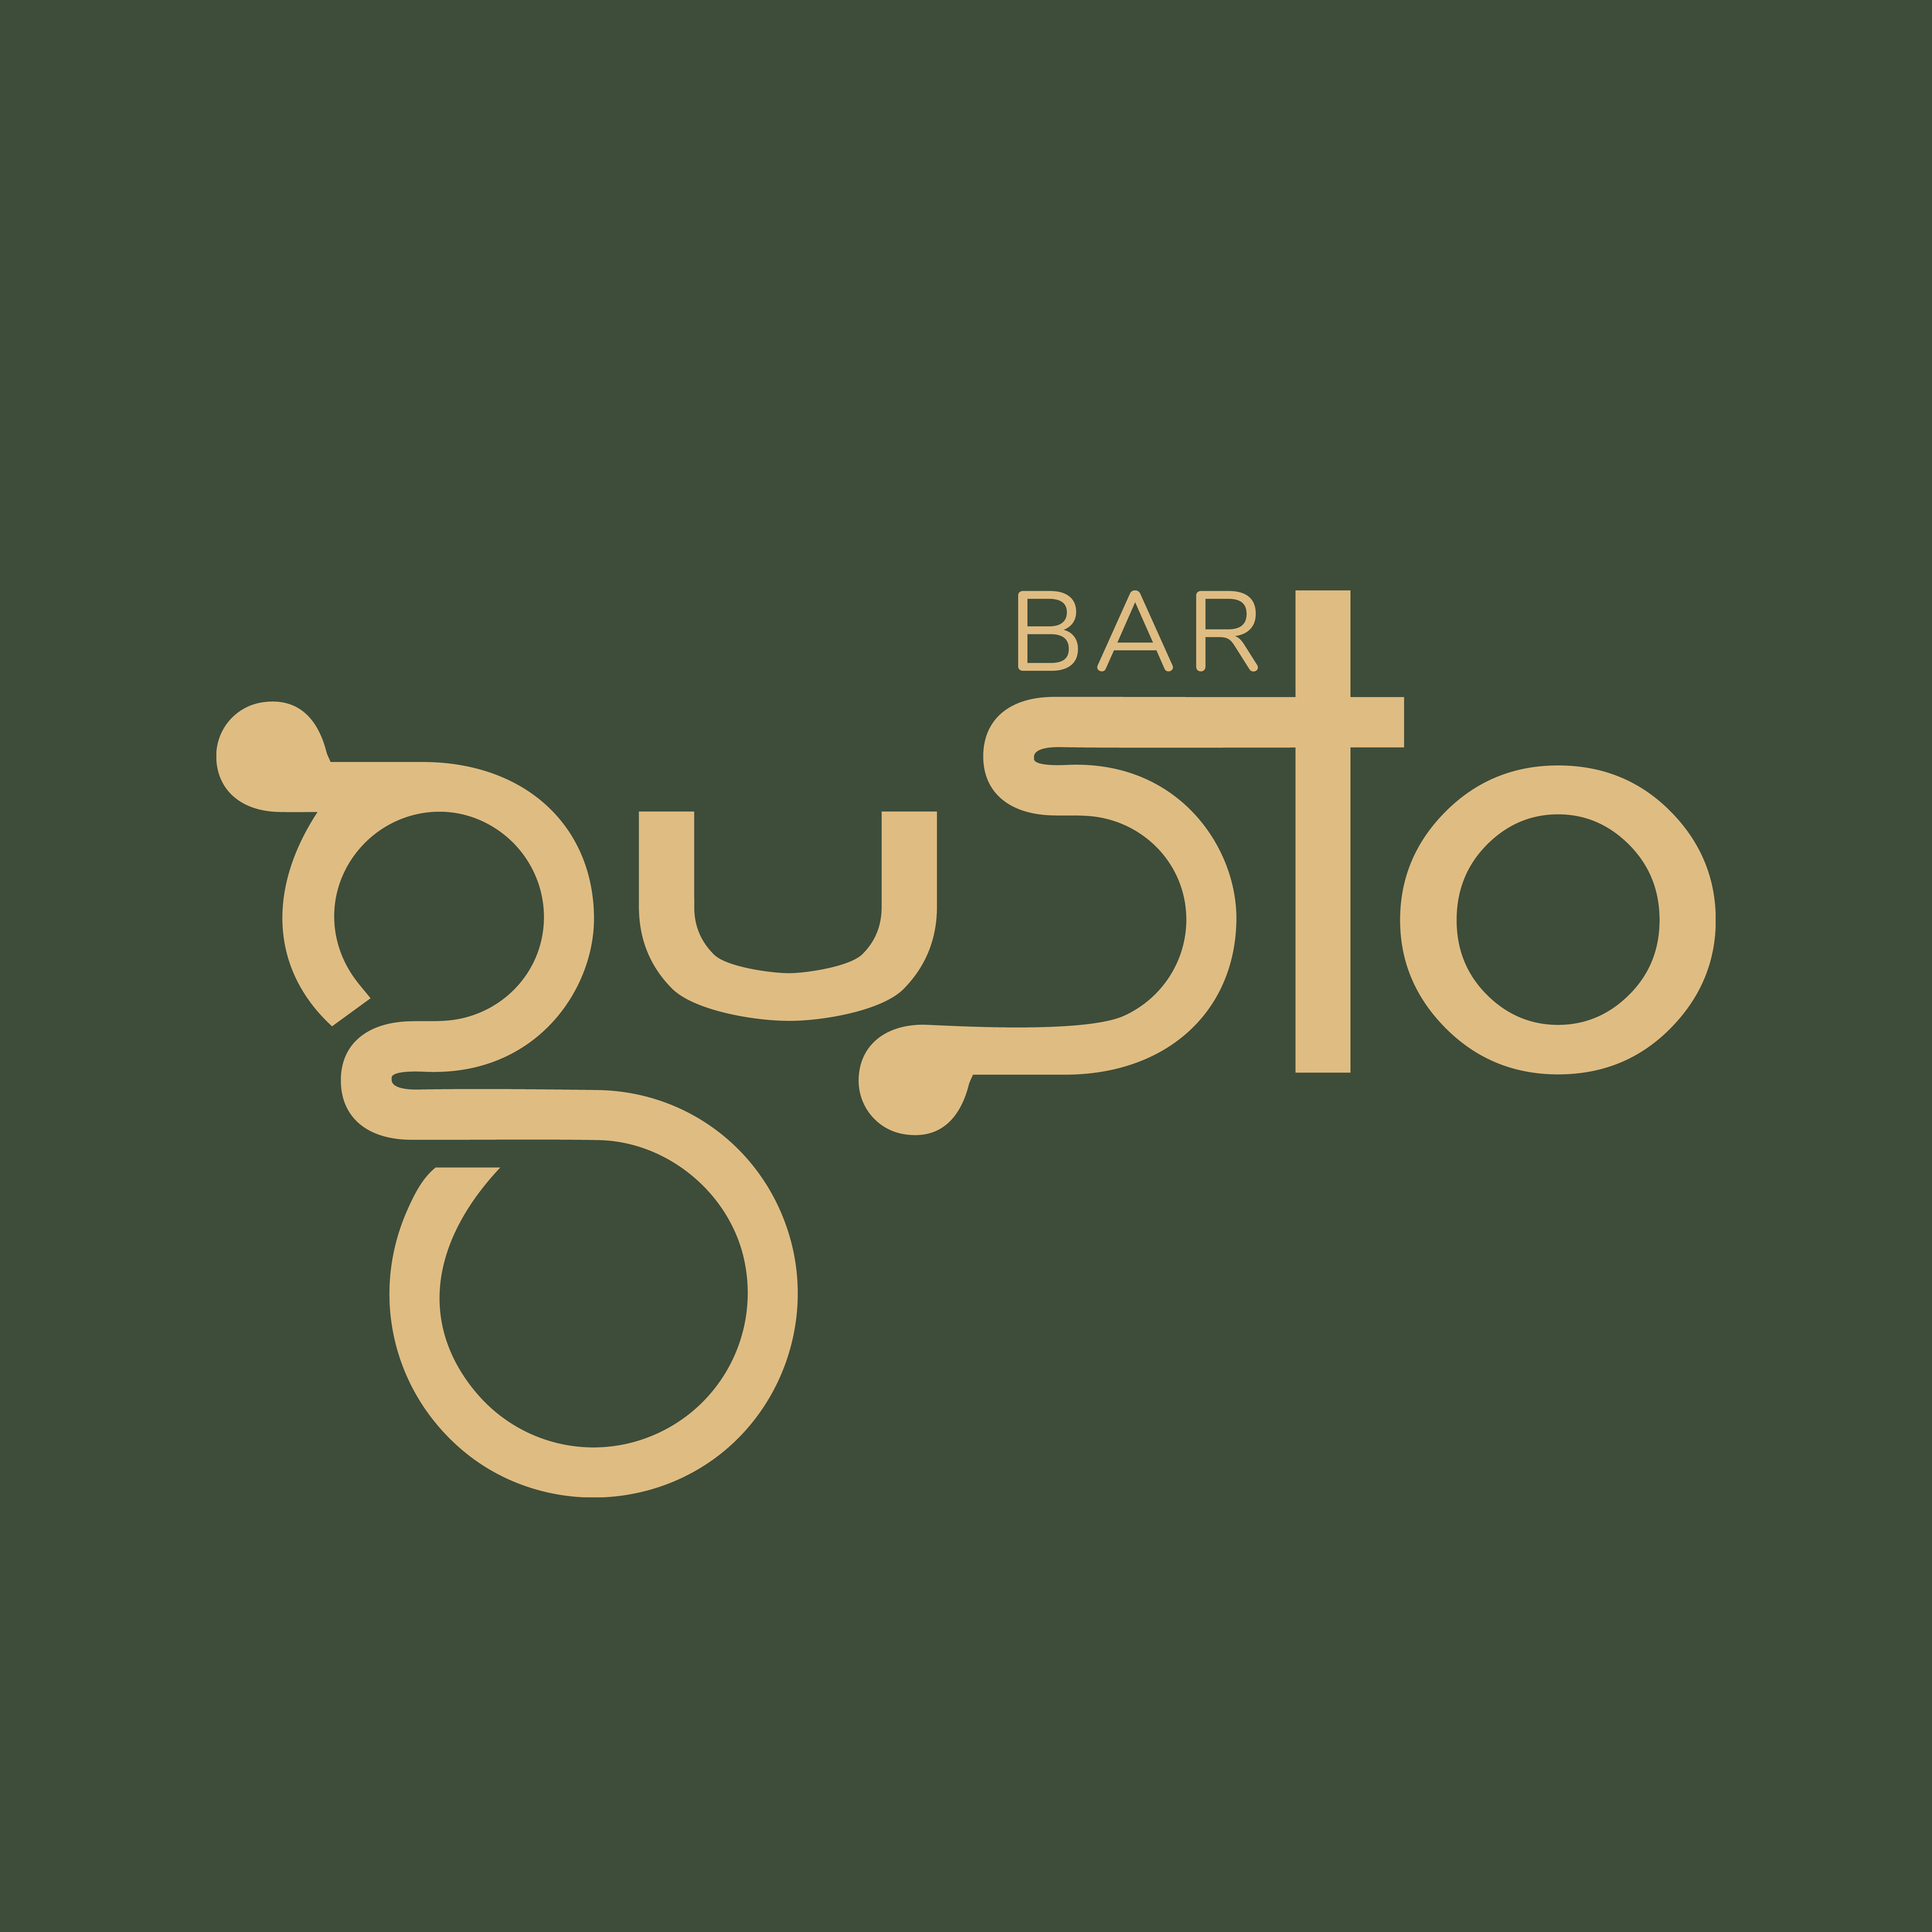 Bar Gusto social profile_eucalyptus.jpg